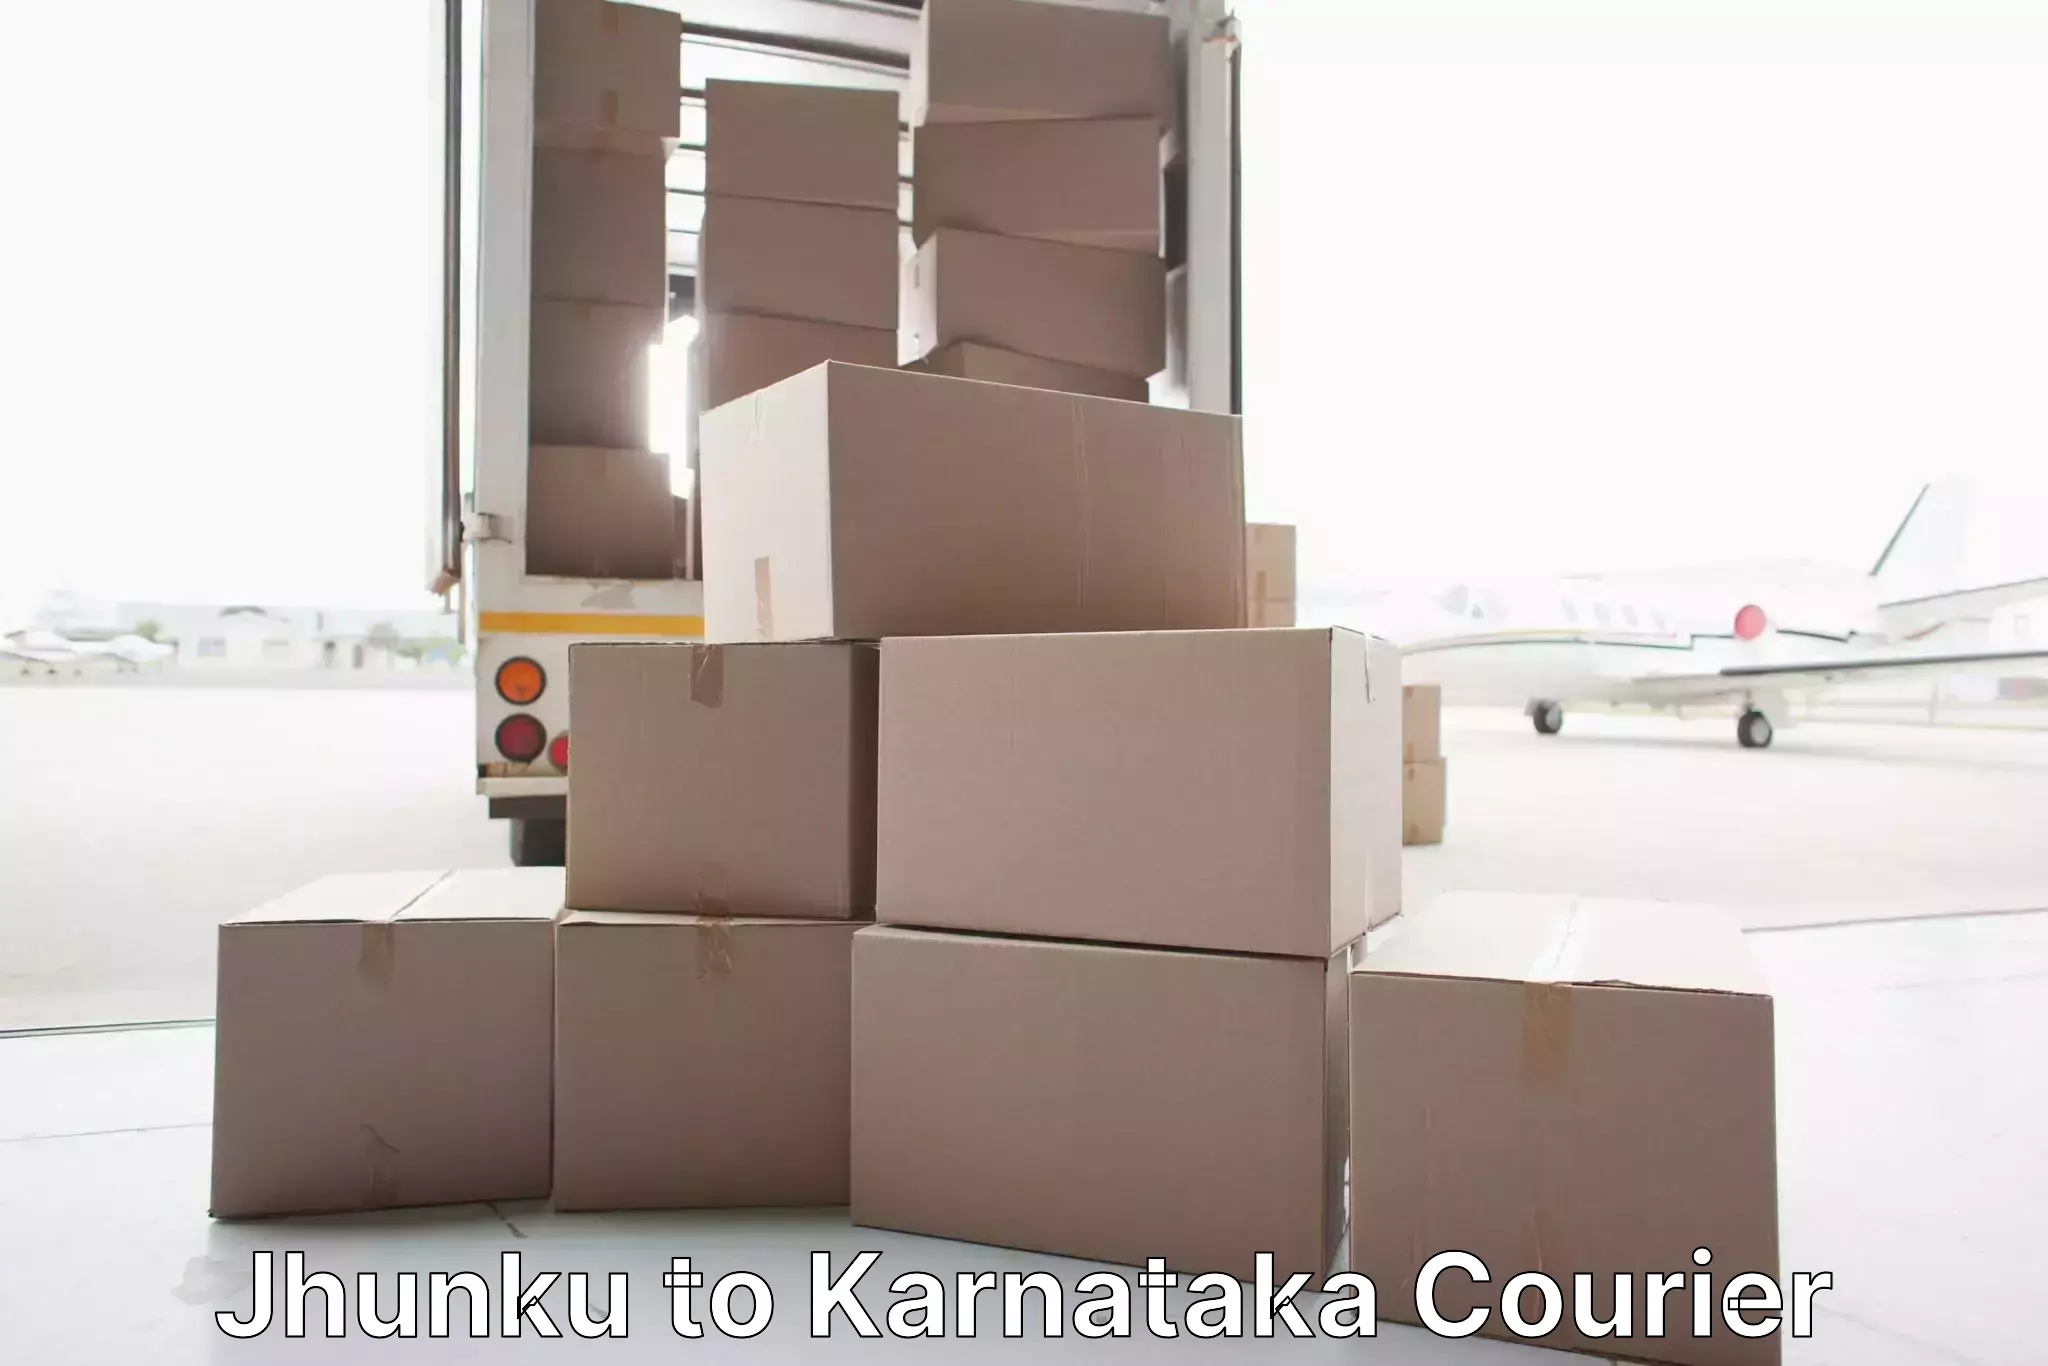 Furniture moving experts Jhunku to Yadgir